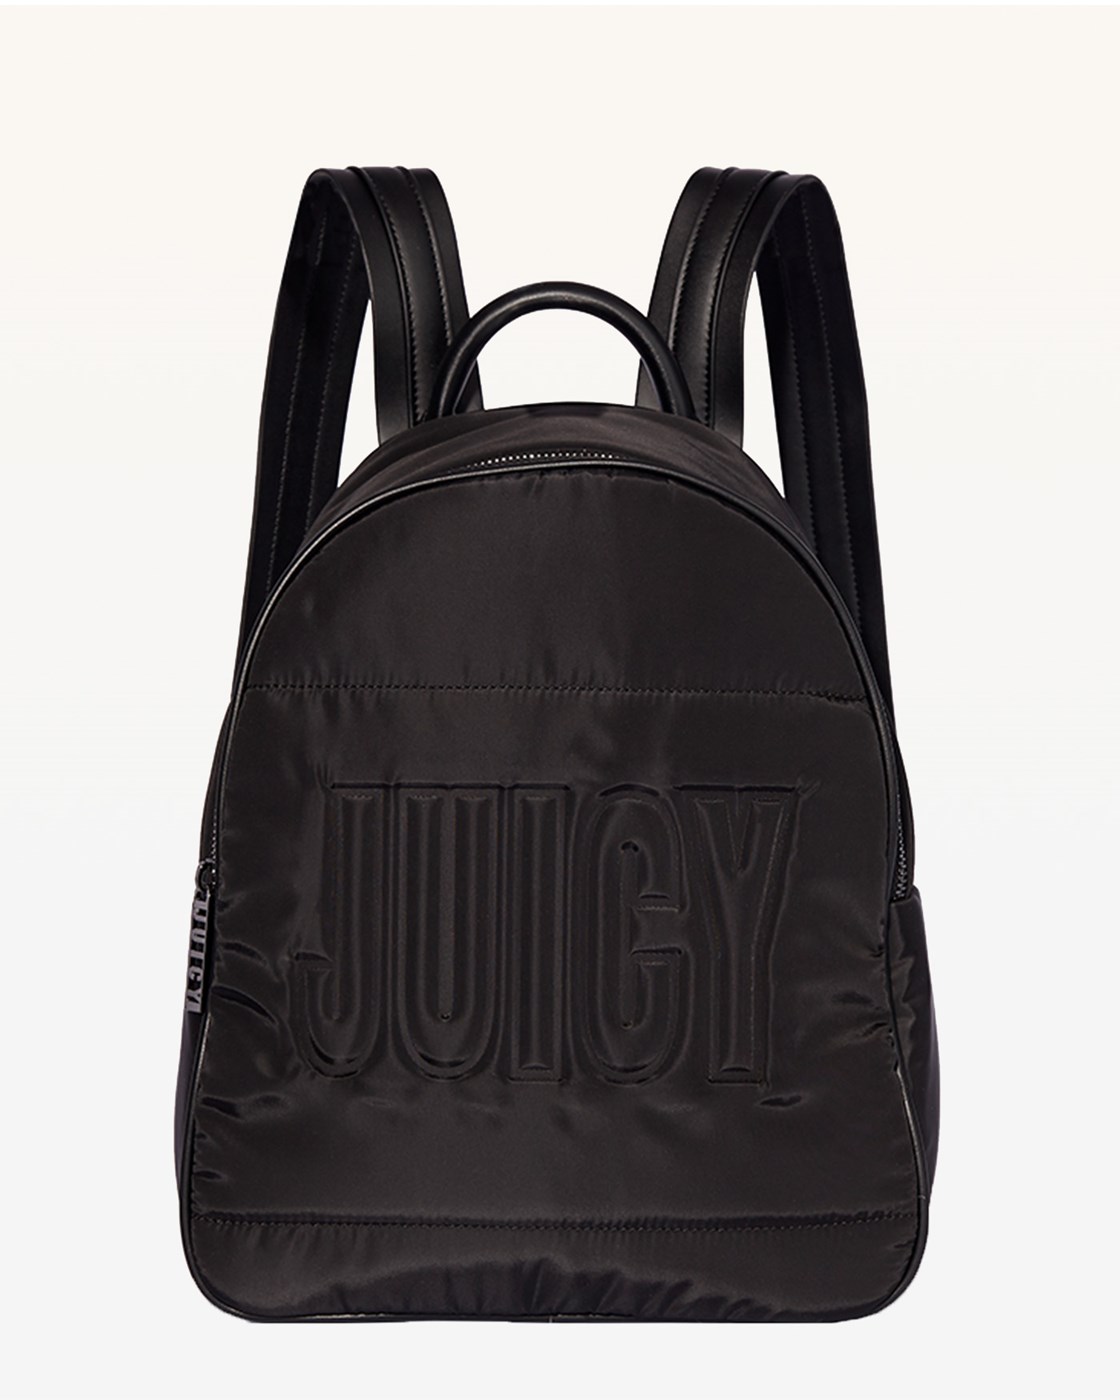 Juicy Couture JXJC Aspen Mini Backpack